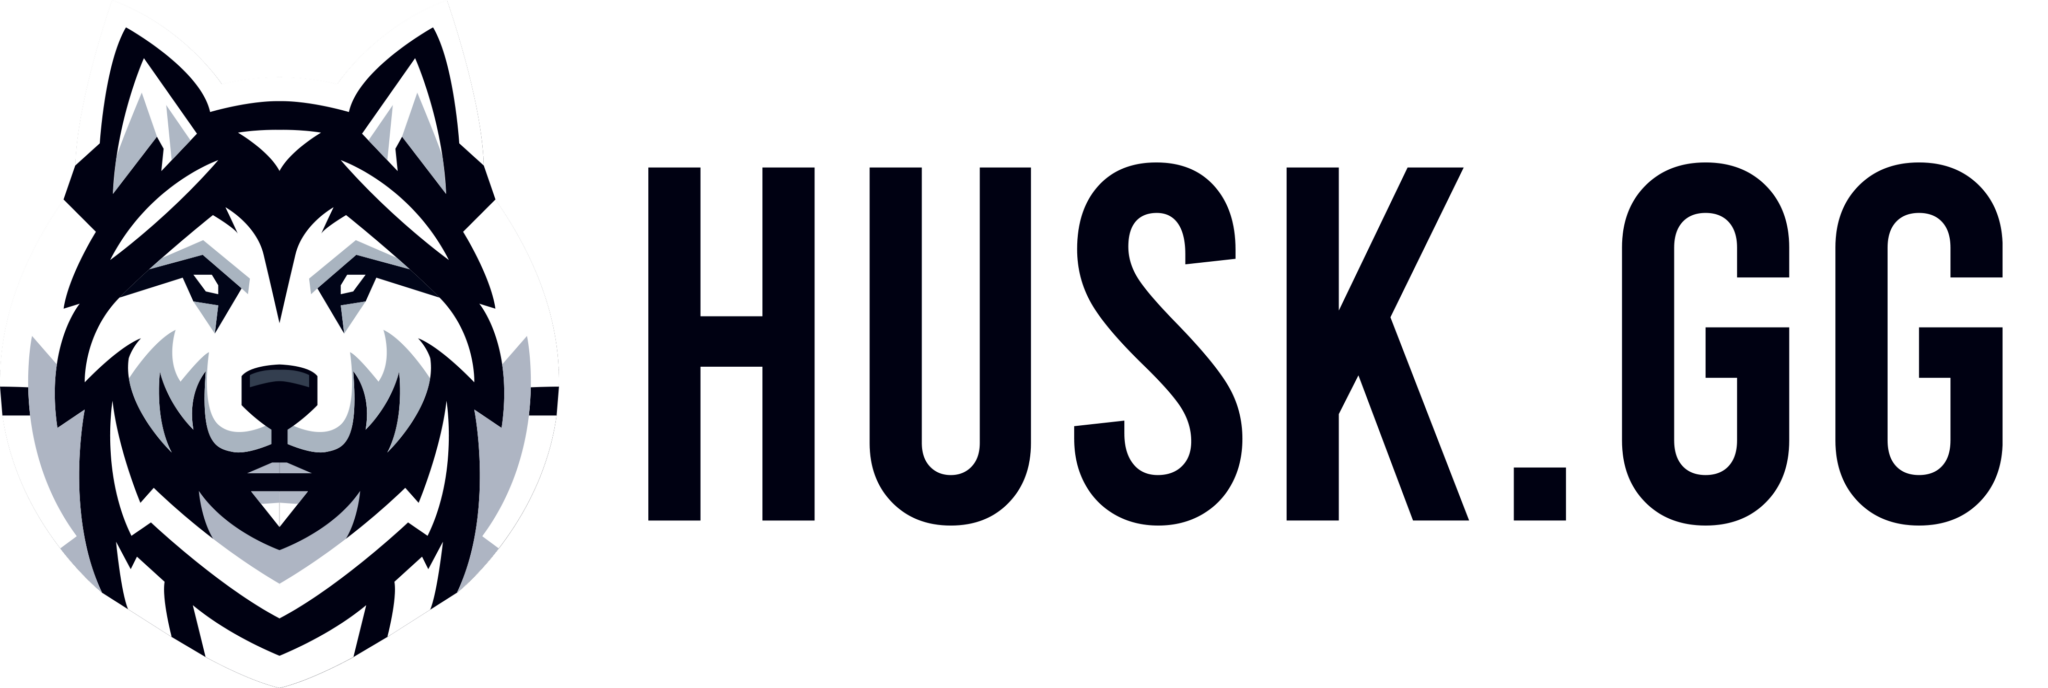 Huskies eSport Jülich Logo